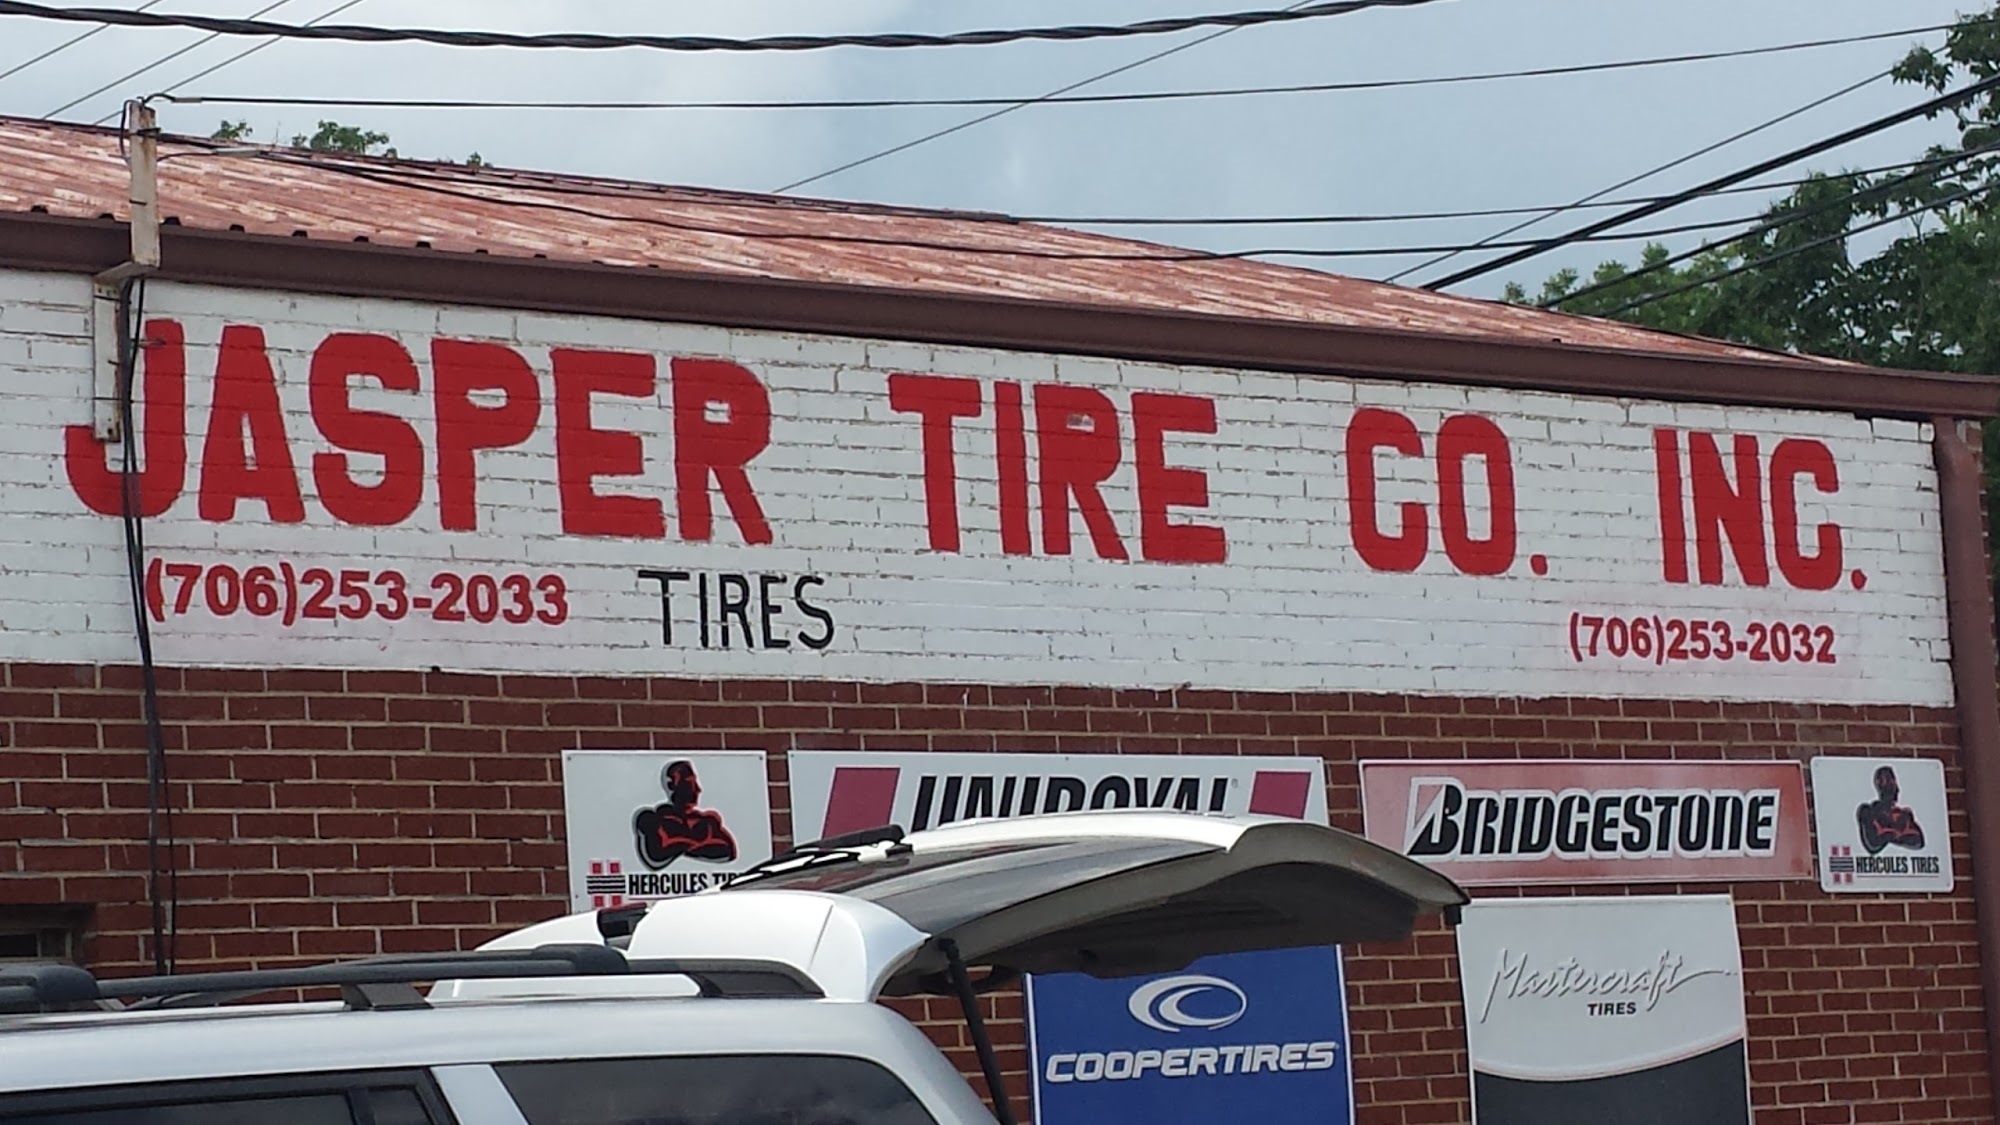 Jasper Tire Co